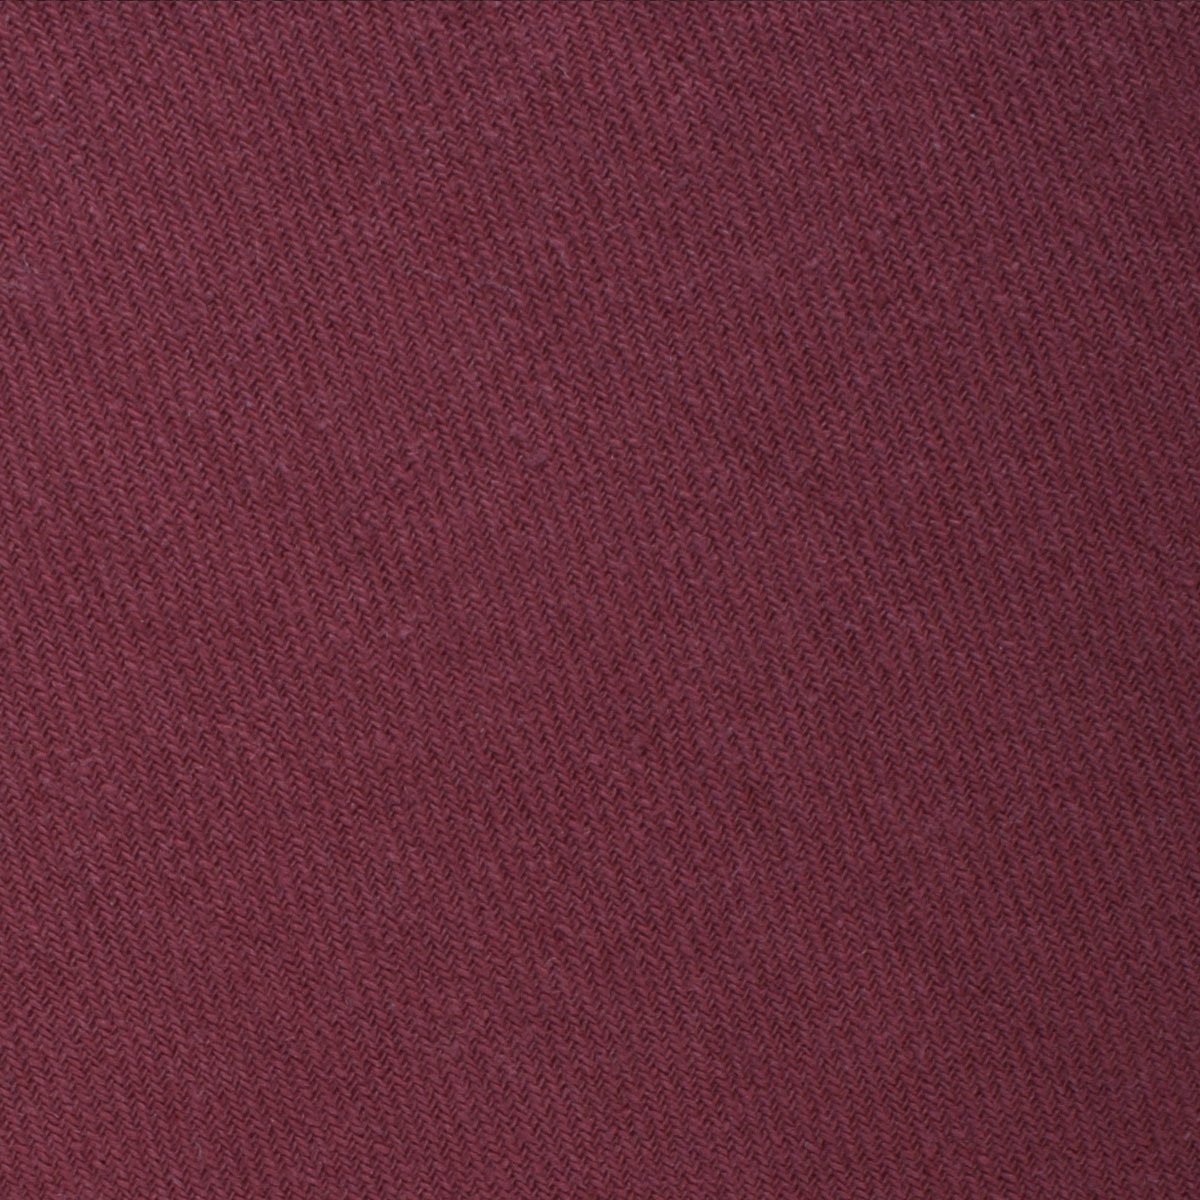 Mulberry Linen Skinny Tie Fabric